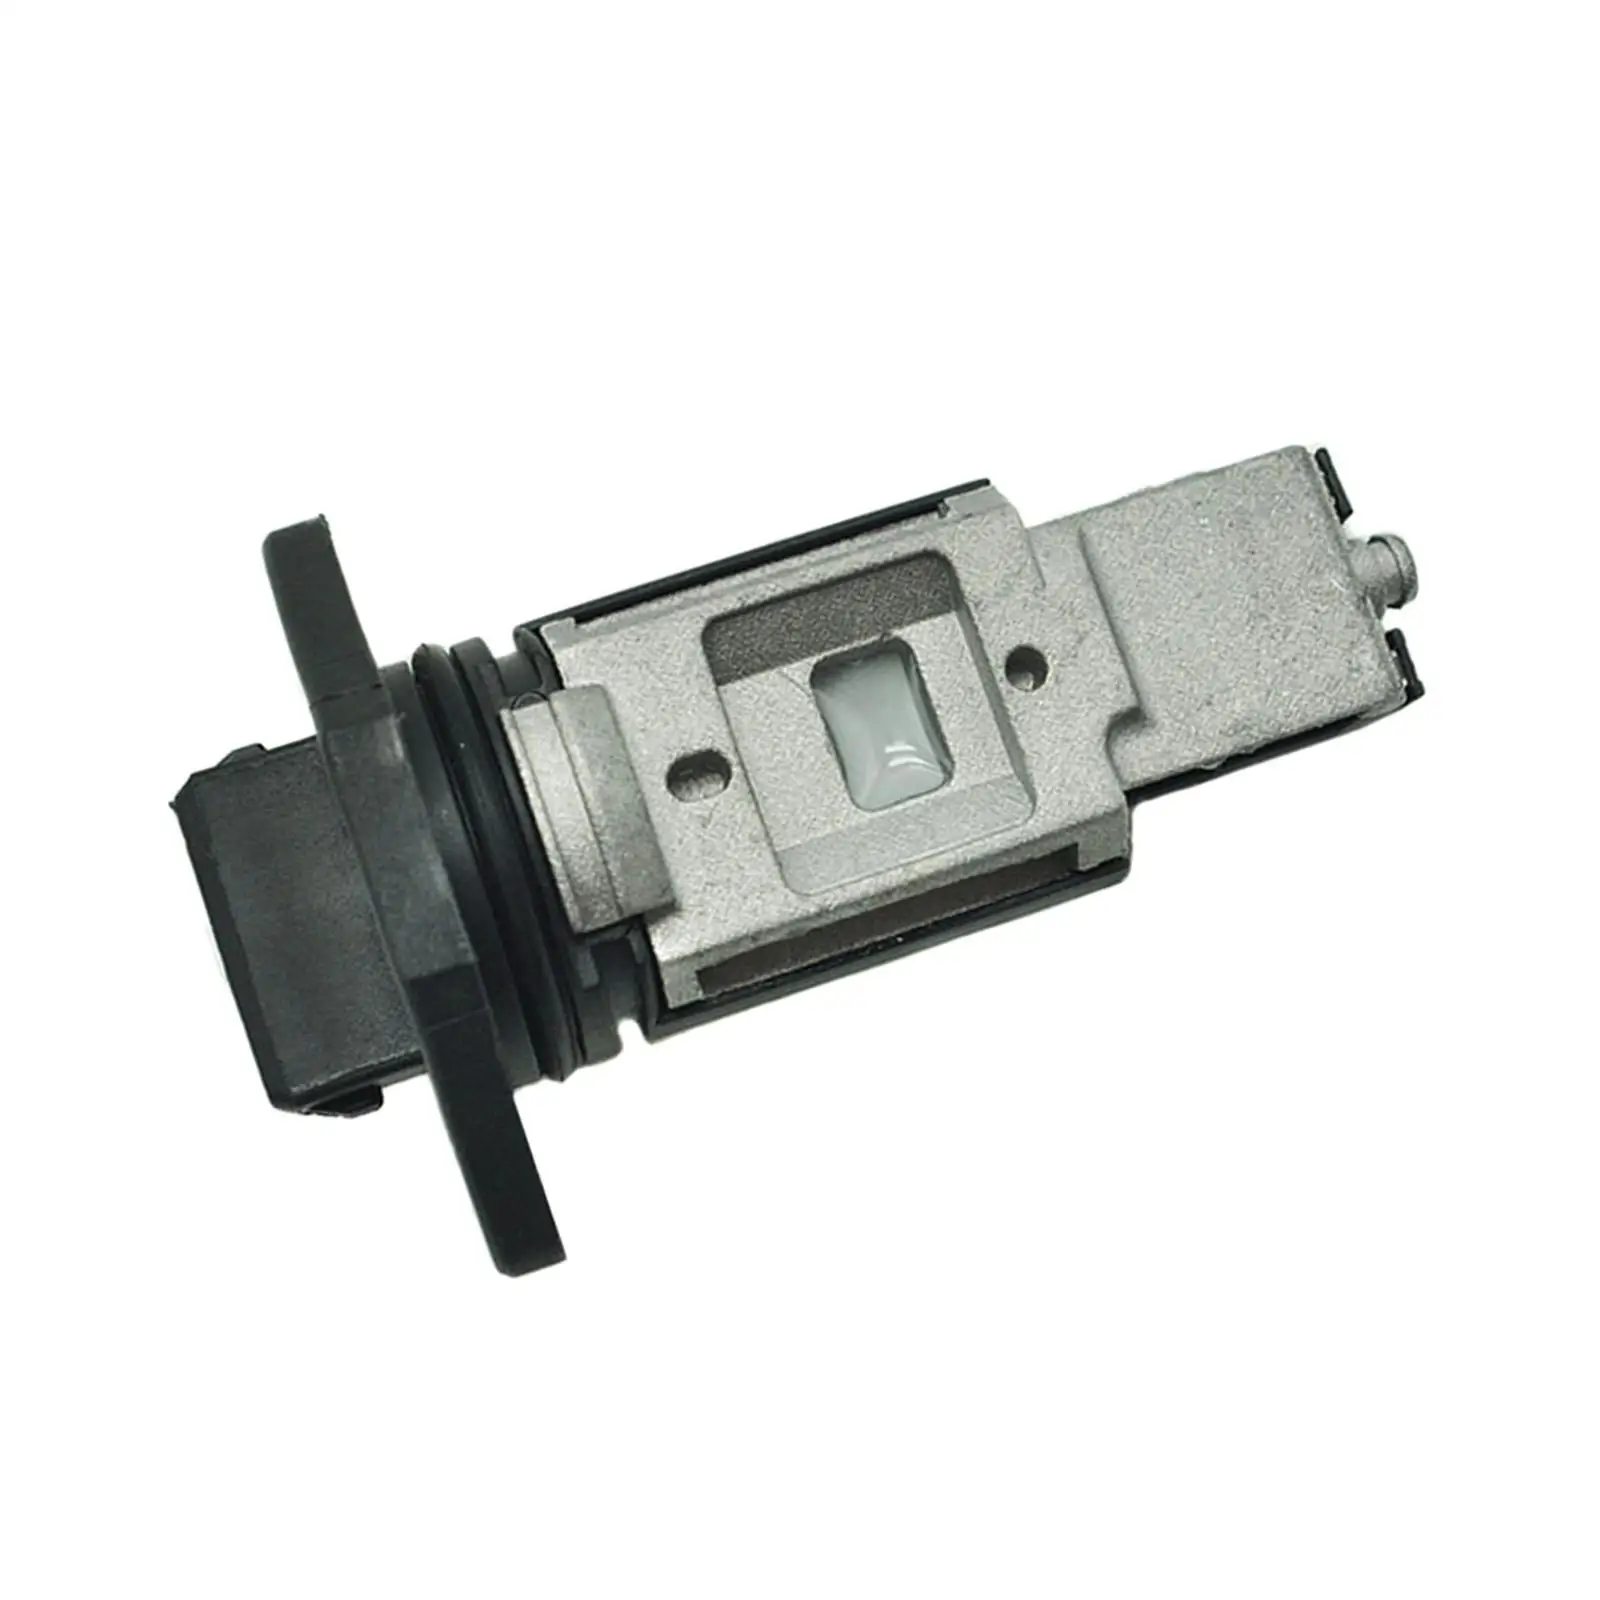 Mass Air Flow Sensor Replacement Parts Maf Meter Sensor, Fit for Audi A8 0280217804, 077133471D